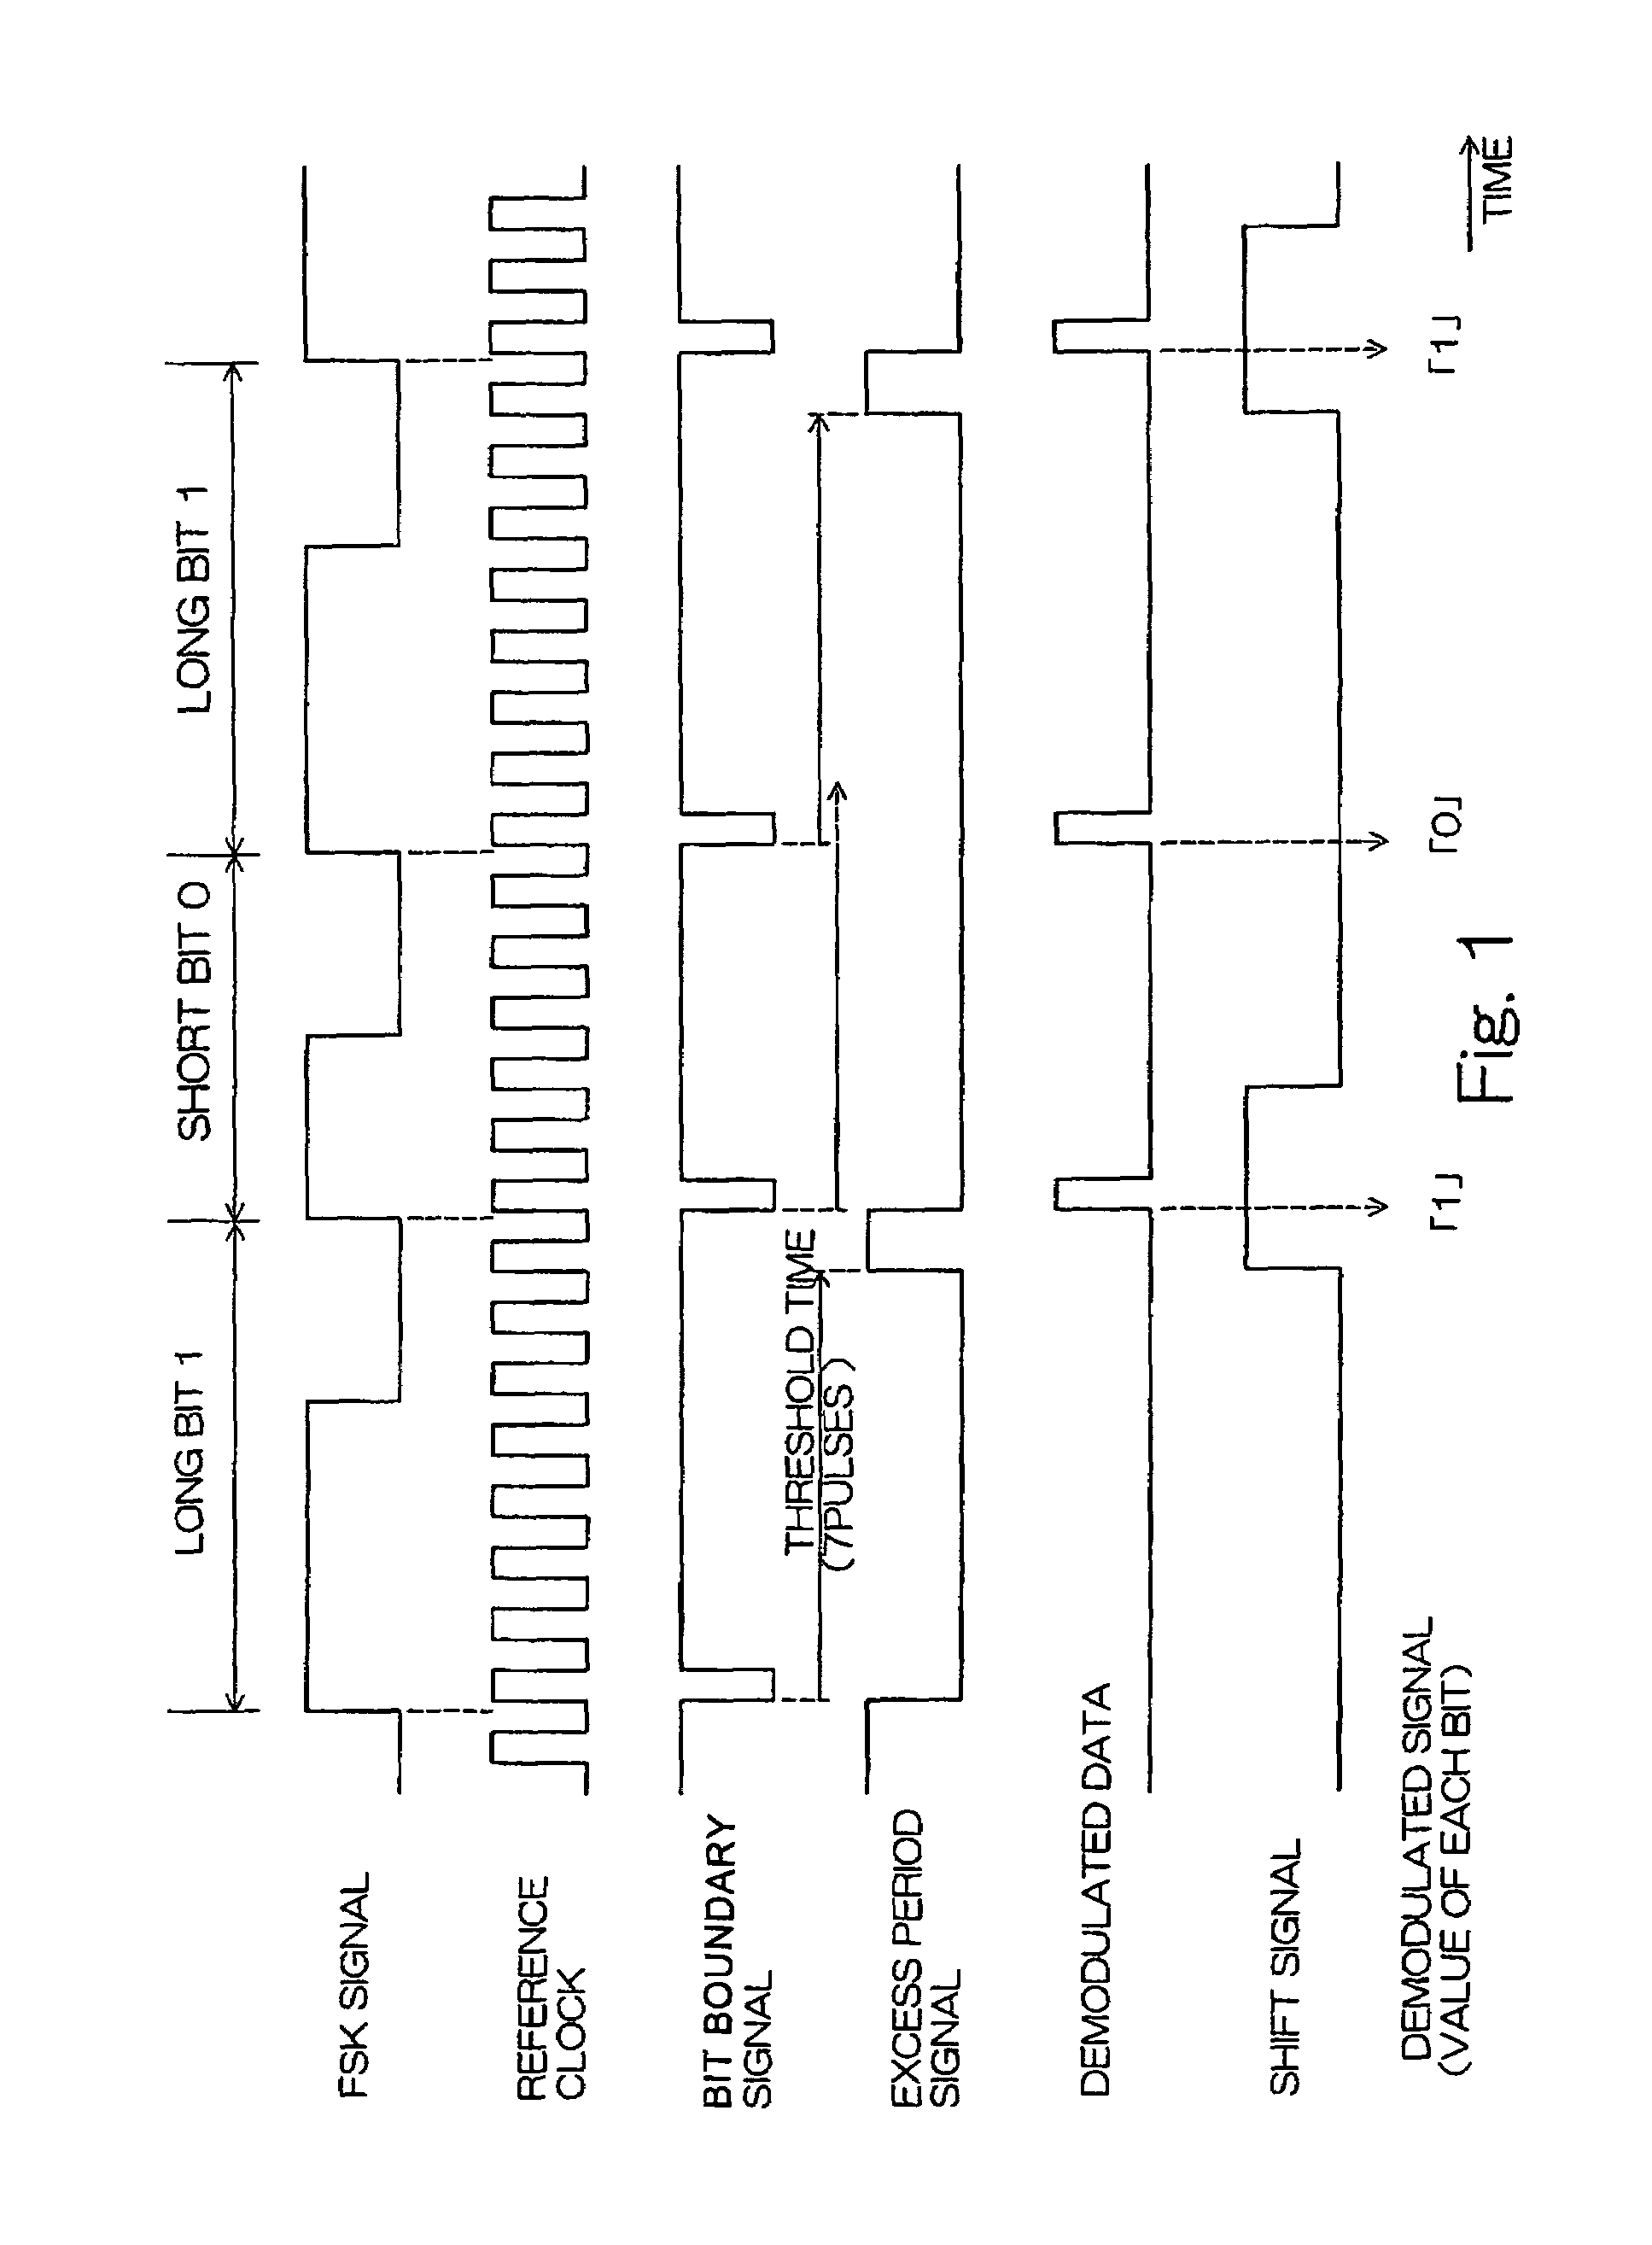 FSK signal demodulation circuit